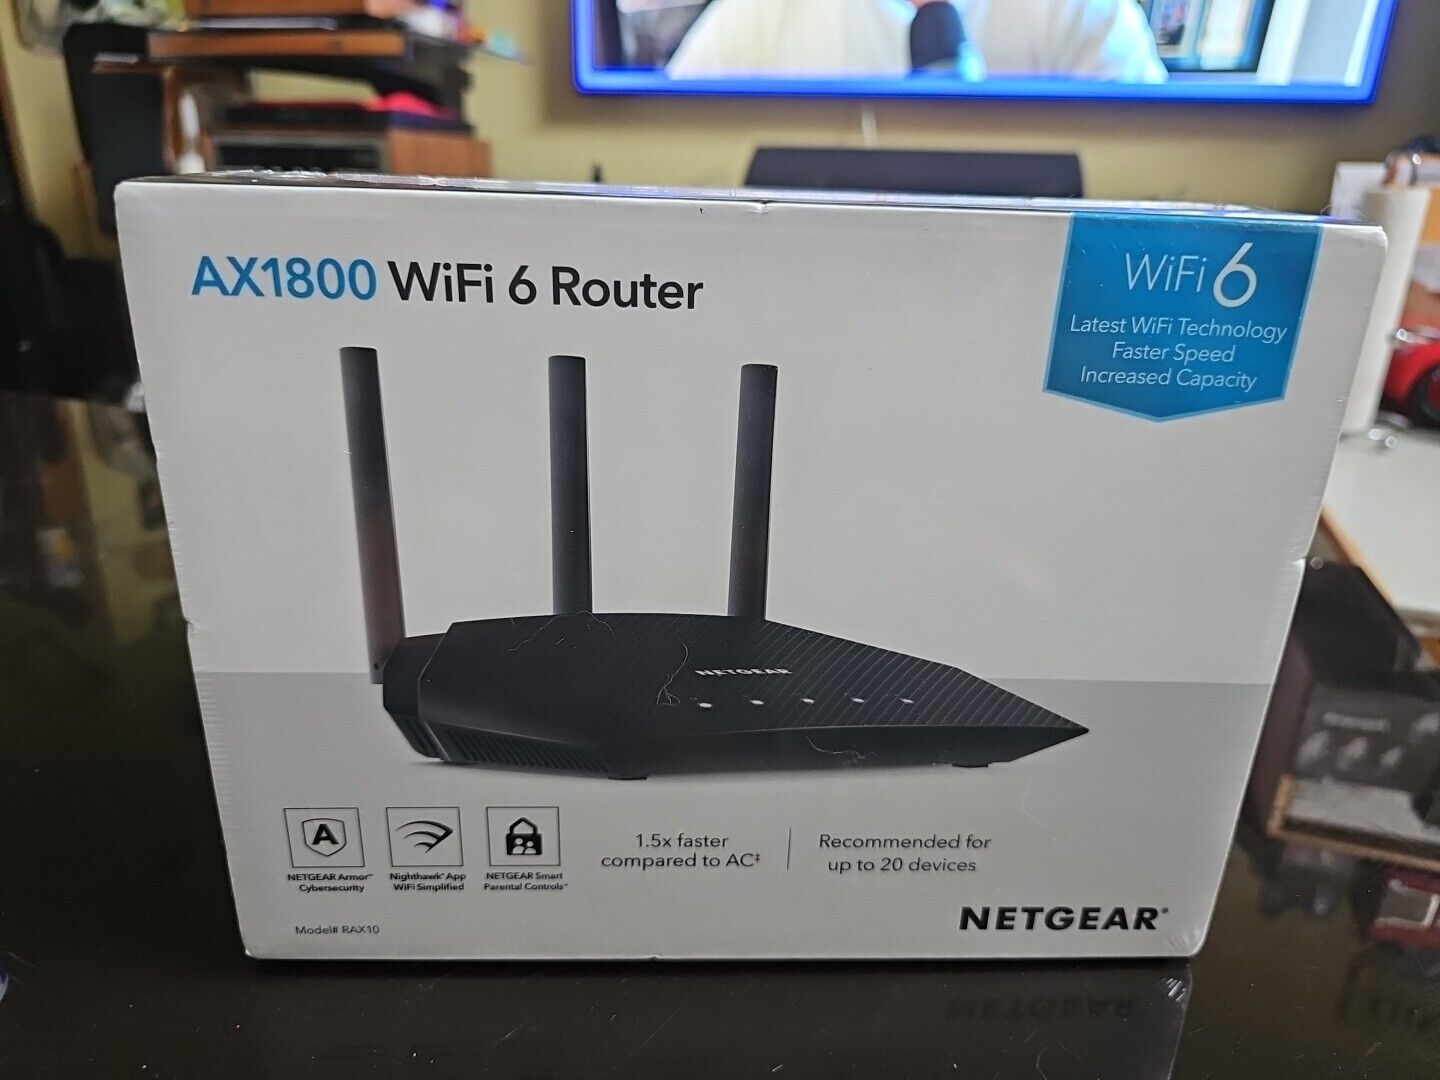 NETGEAR AX1800 Dual Band 4-Stream RAX10-100NAS WiFi 6 Router - NEW & SEALED